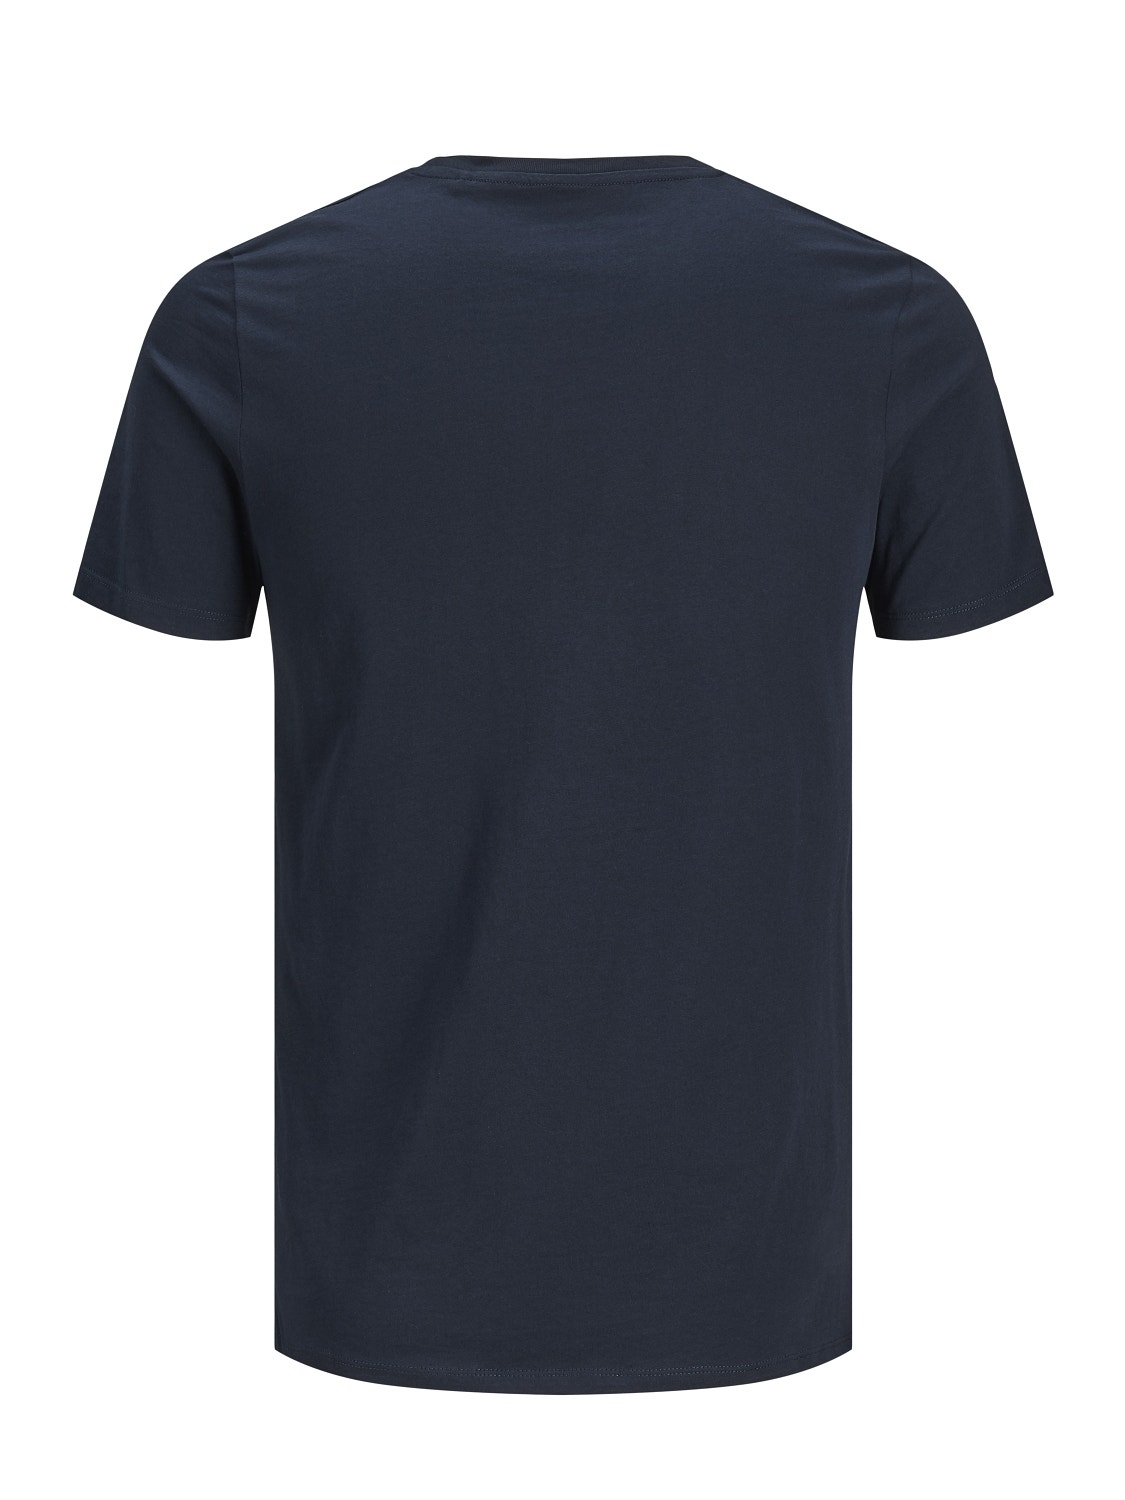 Jack & Jones T-shirt Logo Col rond -Navy Blazer - 12151955